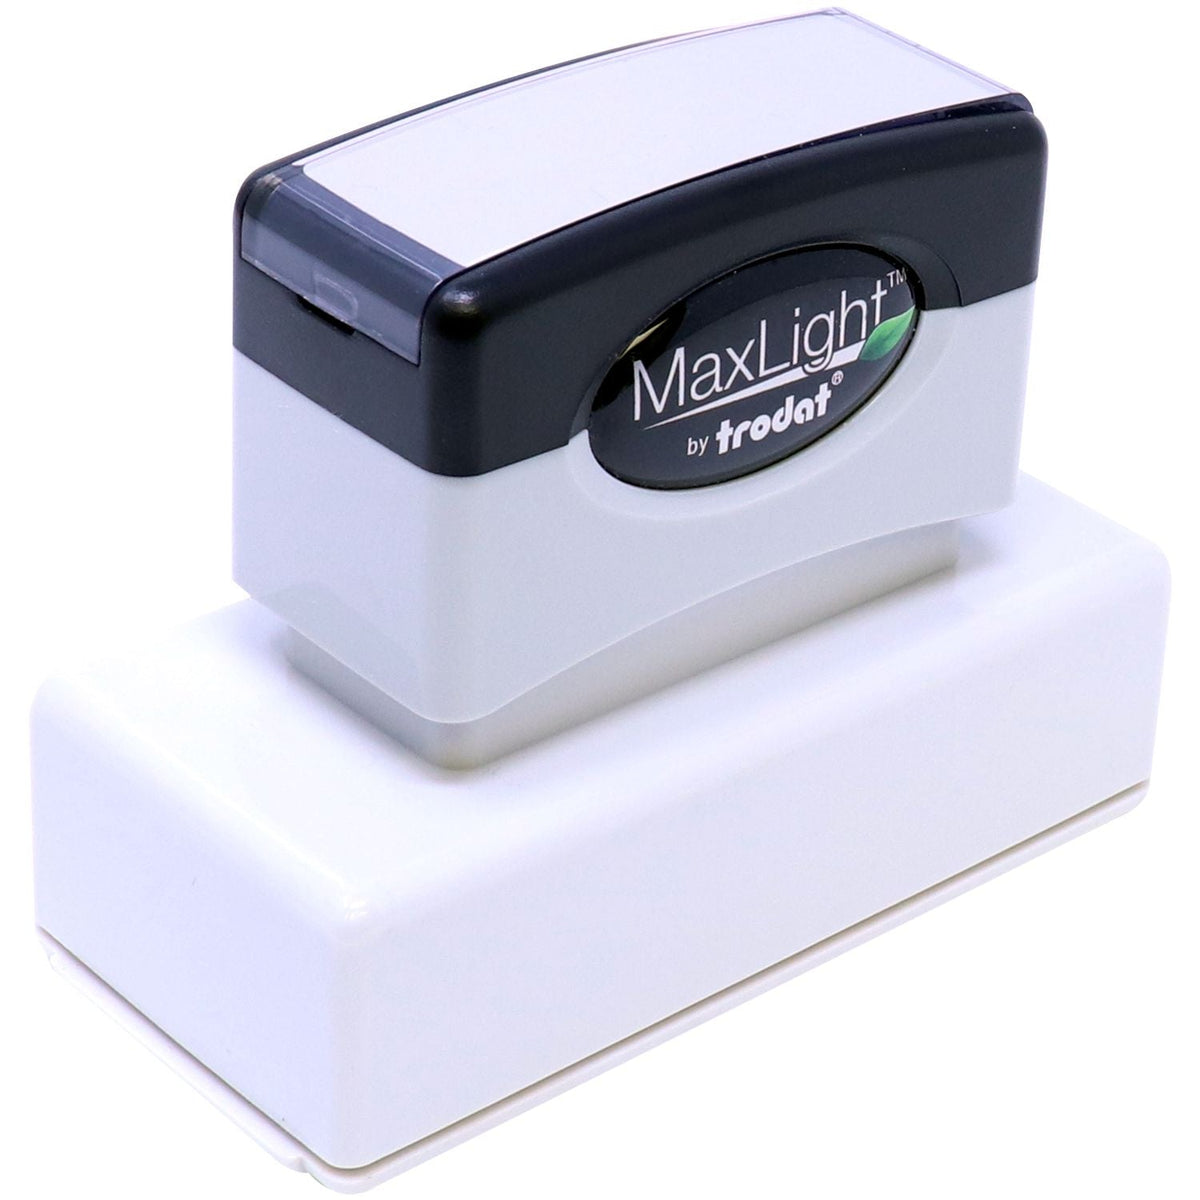 Maxlight Custom Stamp Xl2 185 Top Front Angle